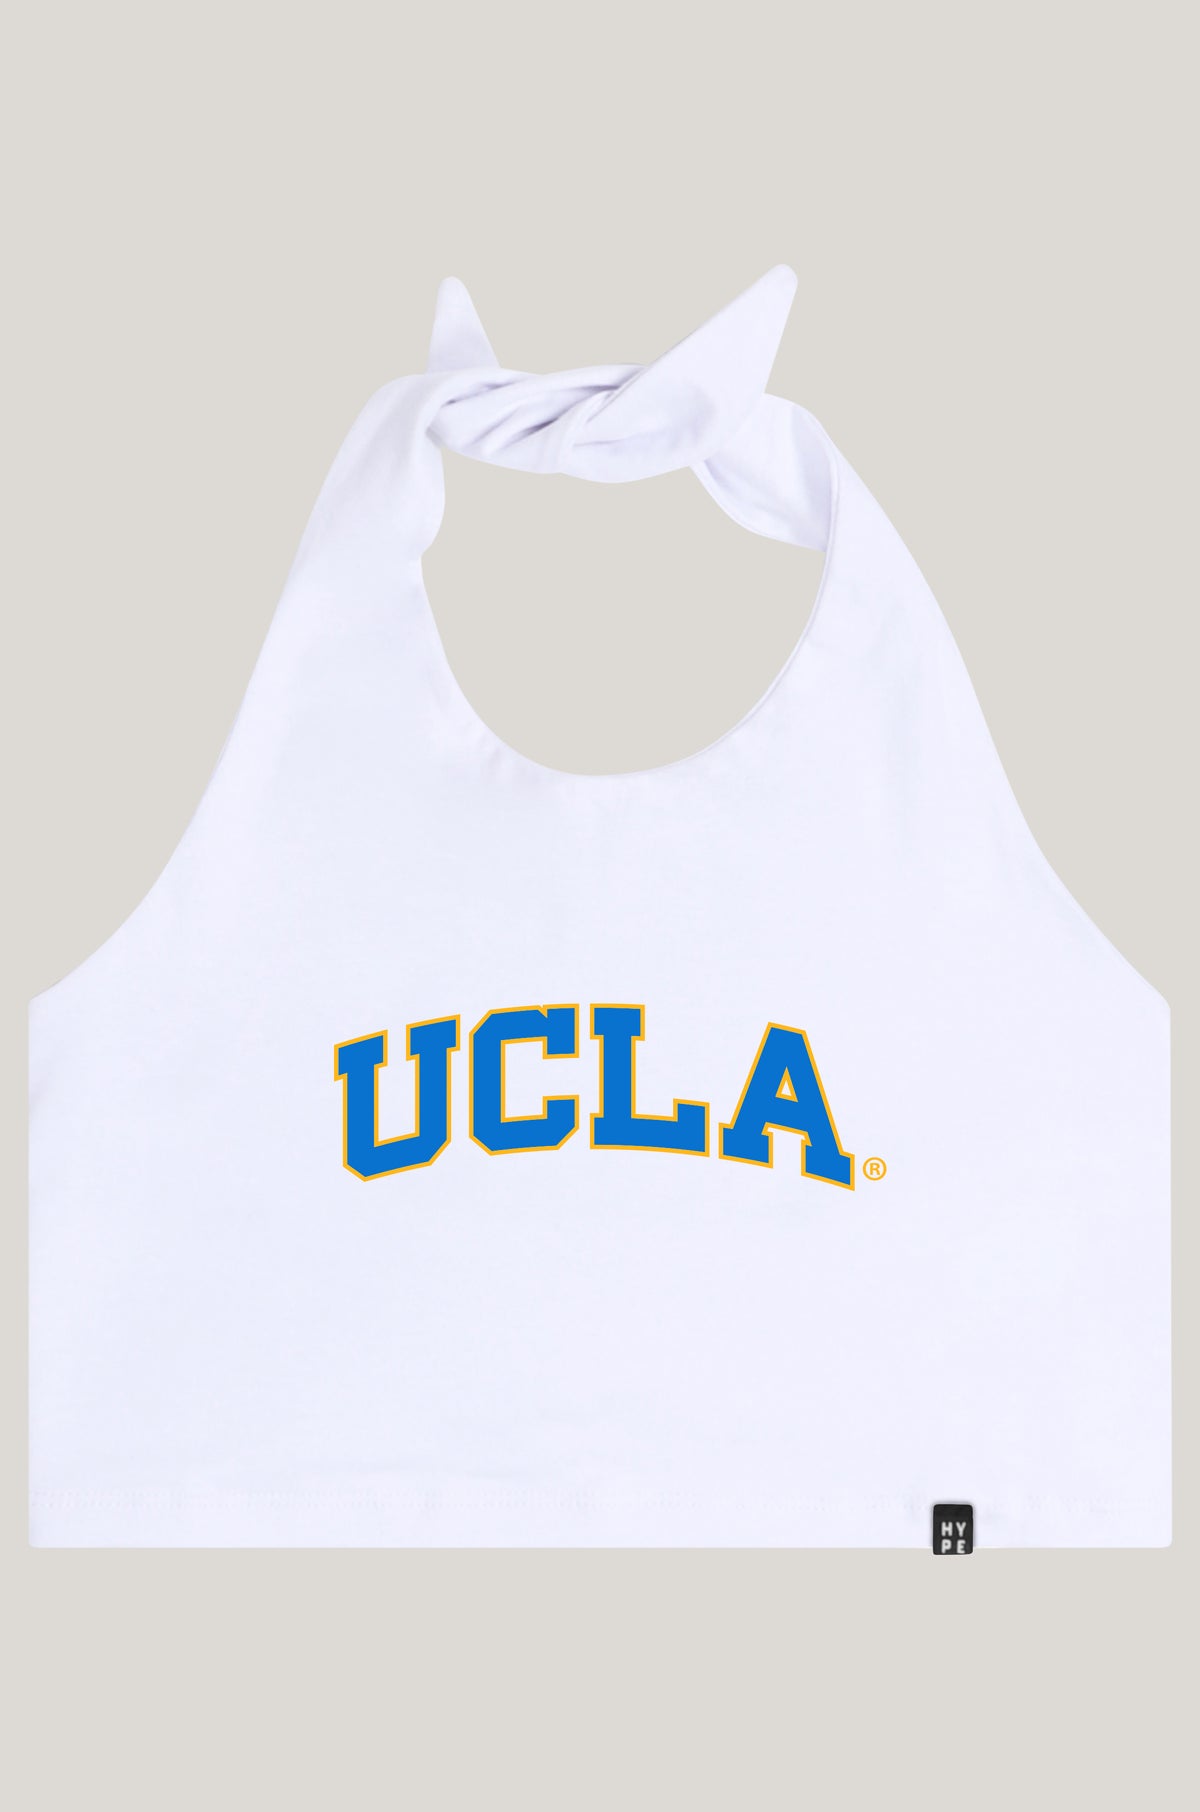 UCLA Tailgate Top